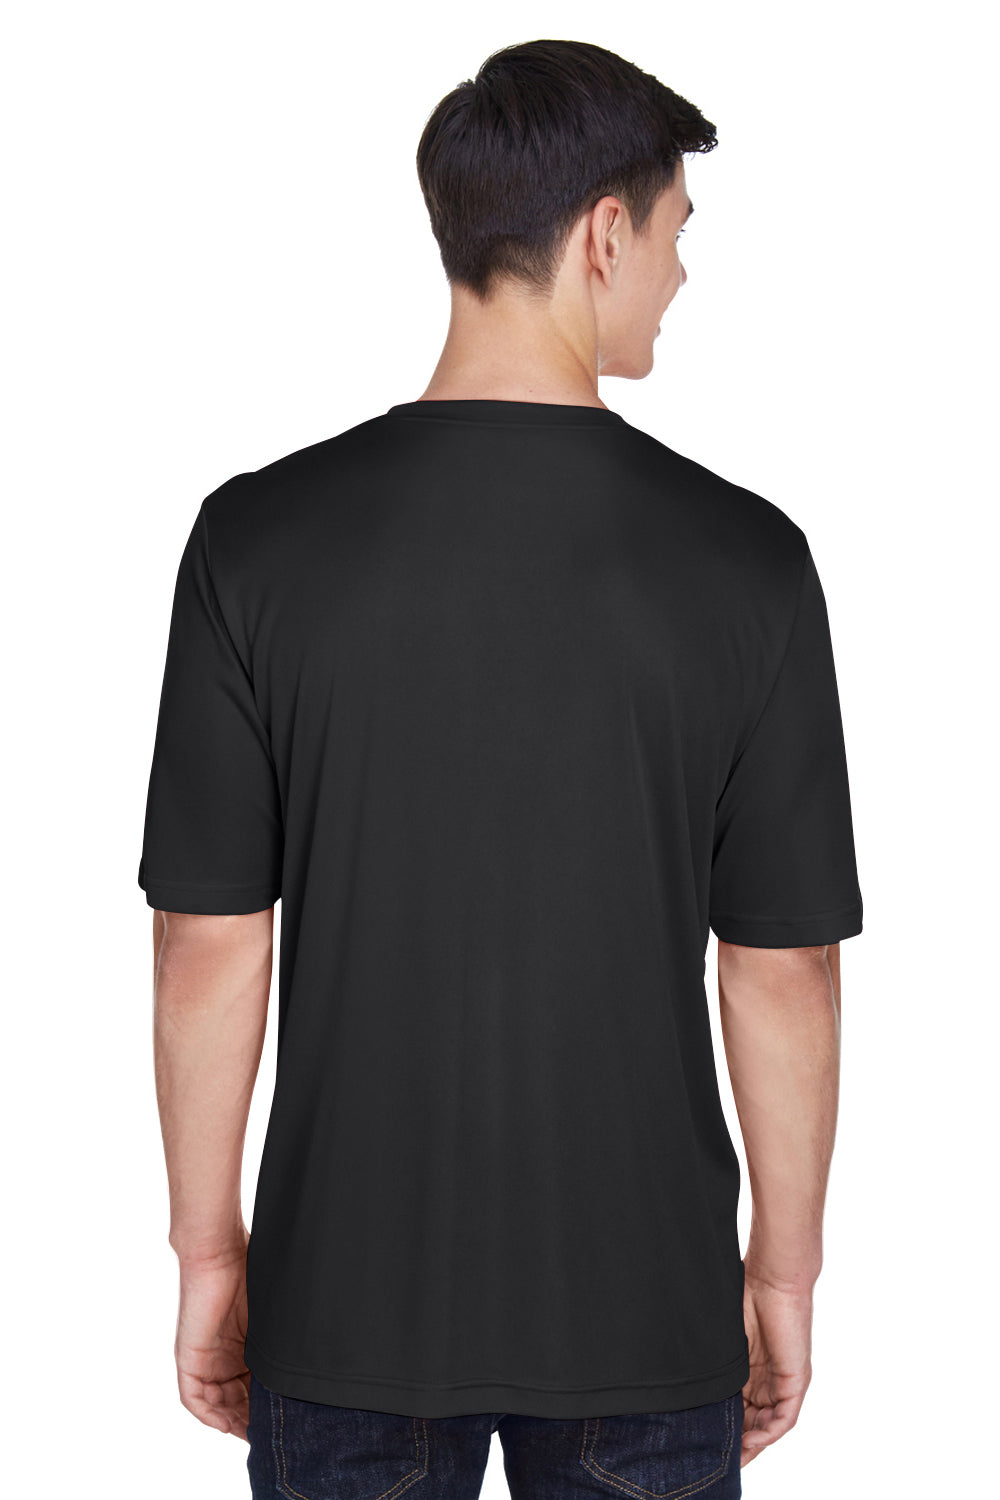 Team 365 TT11 Mens Zone Performance Moisture Wicking Short Sleeve Crewneck T-Shirt Black Back